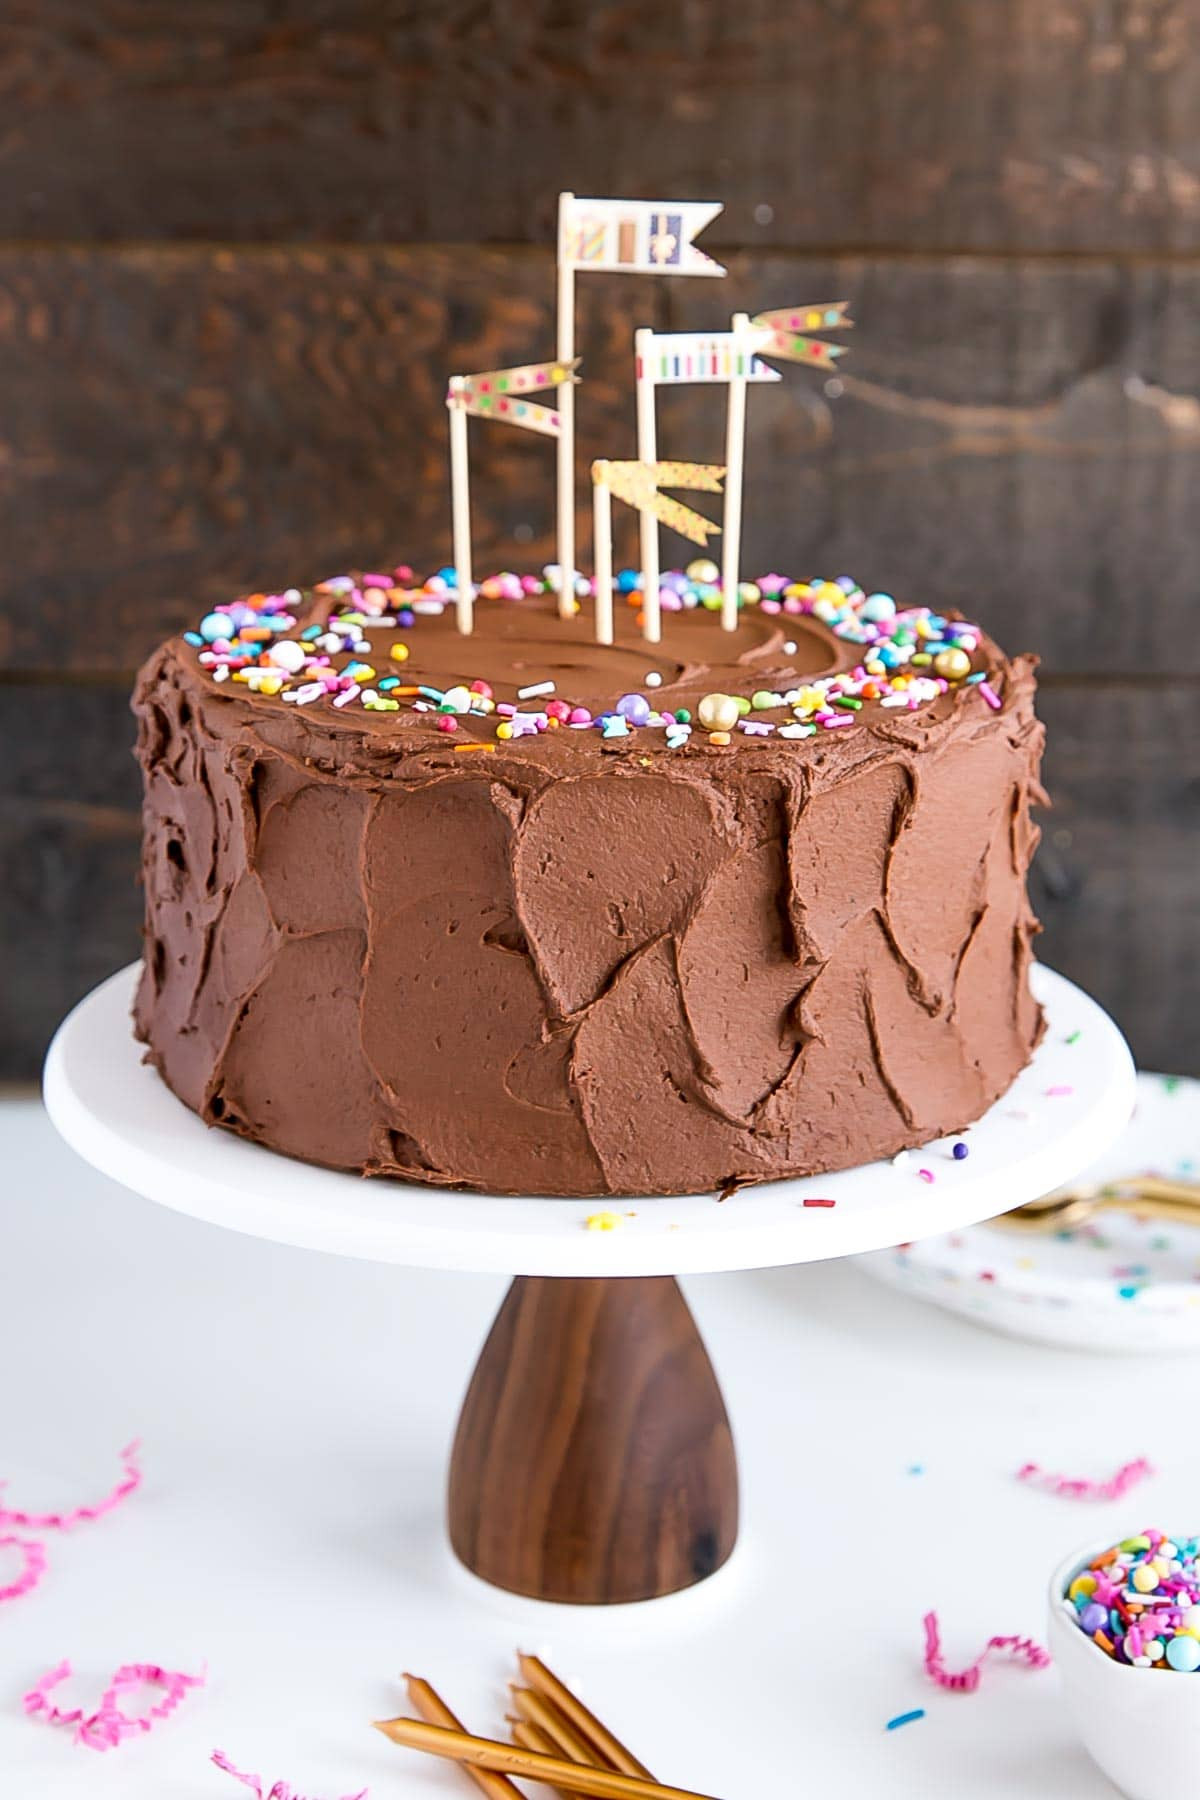 Picture Of Birthday Cakes
 18 Fun Birthday Cake Inspired Desserts